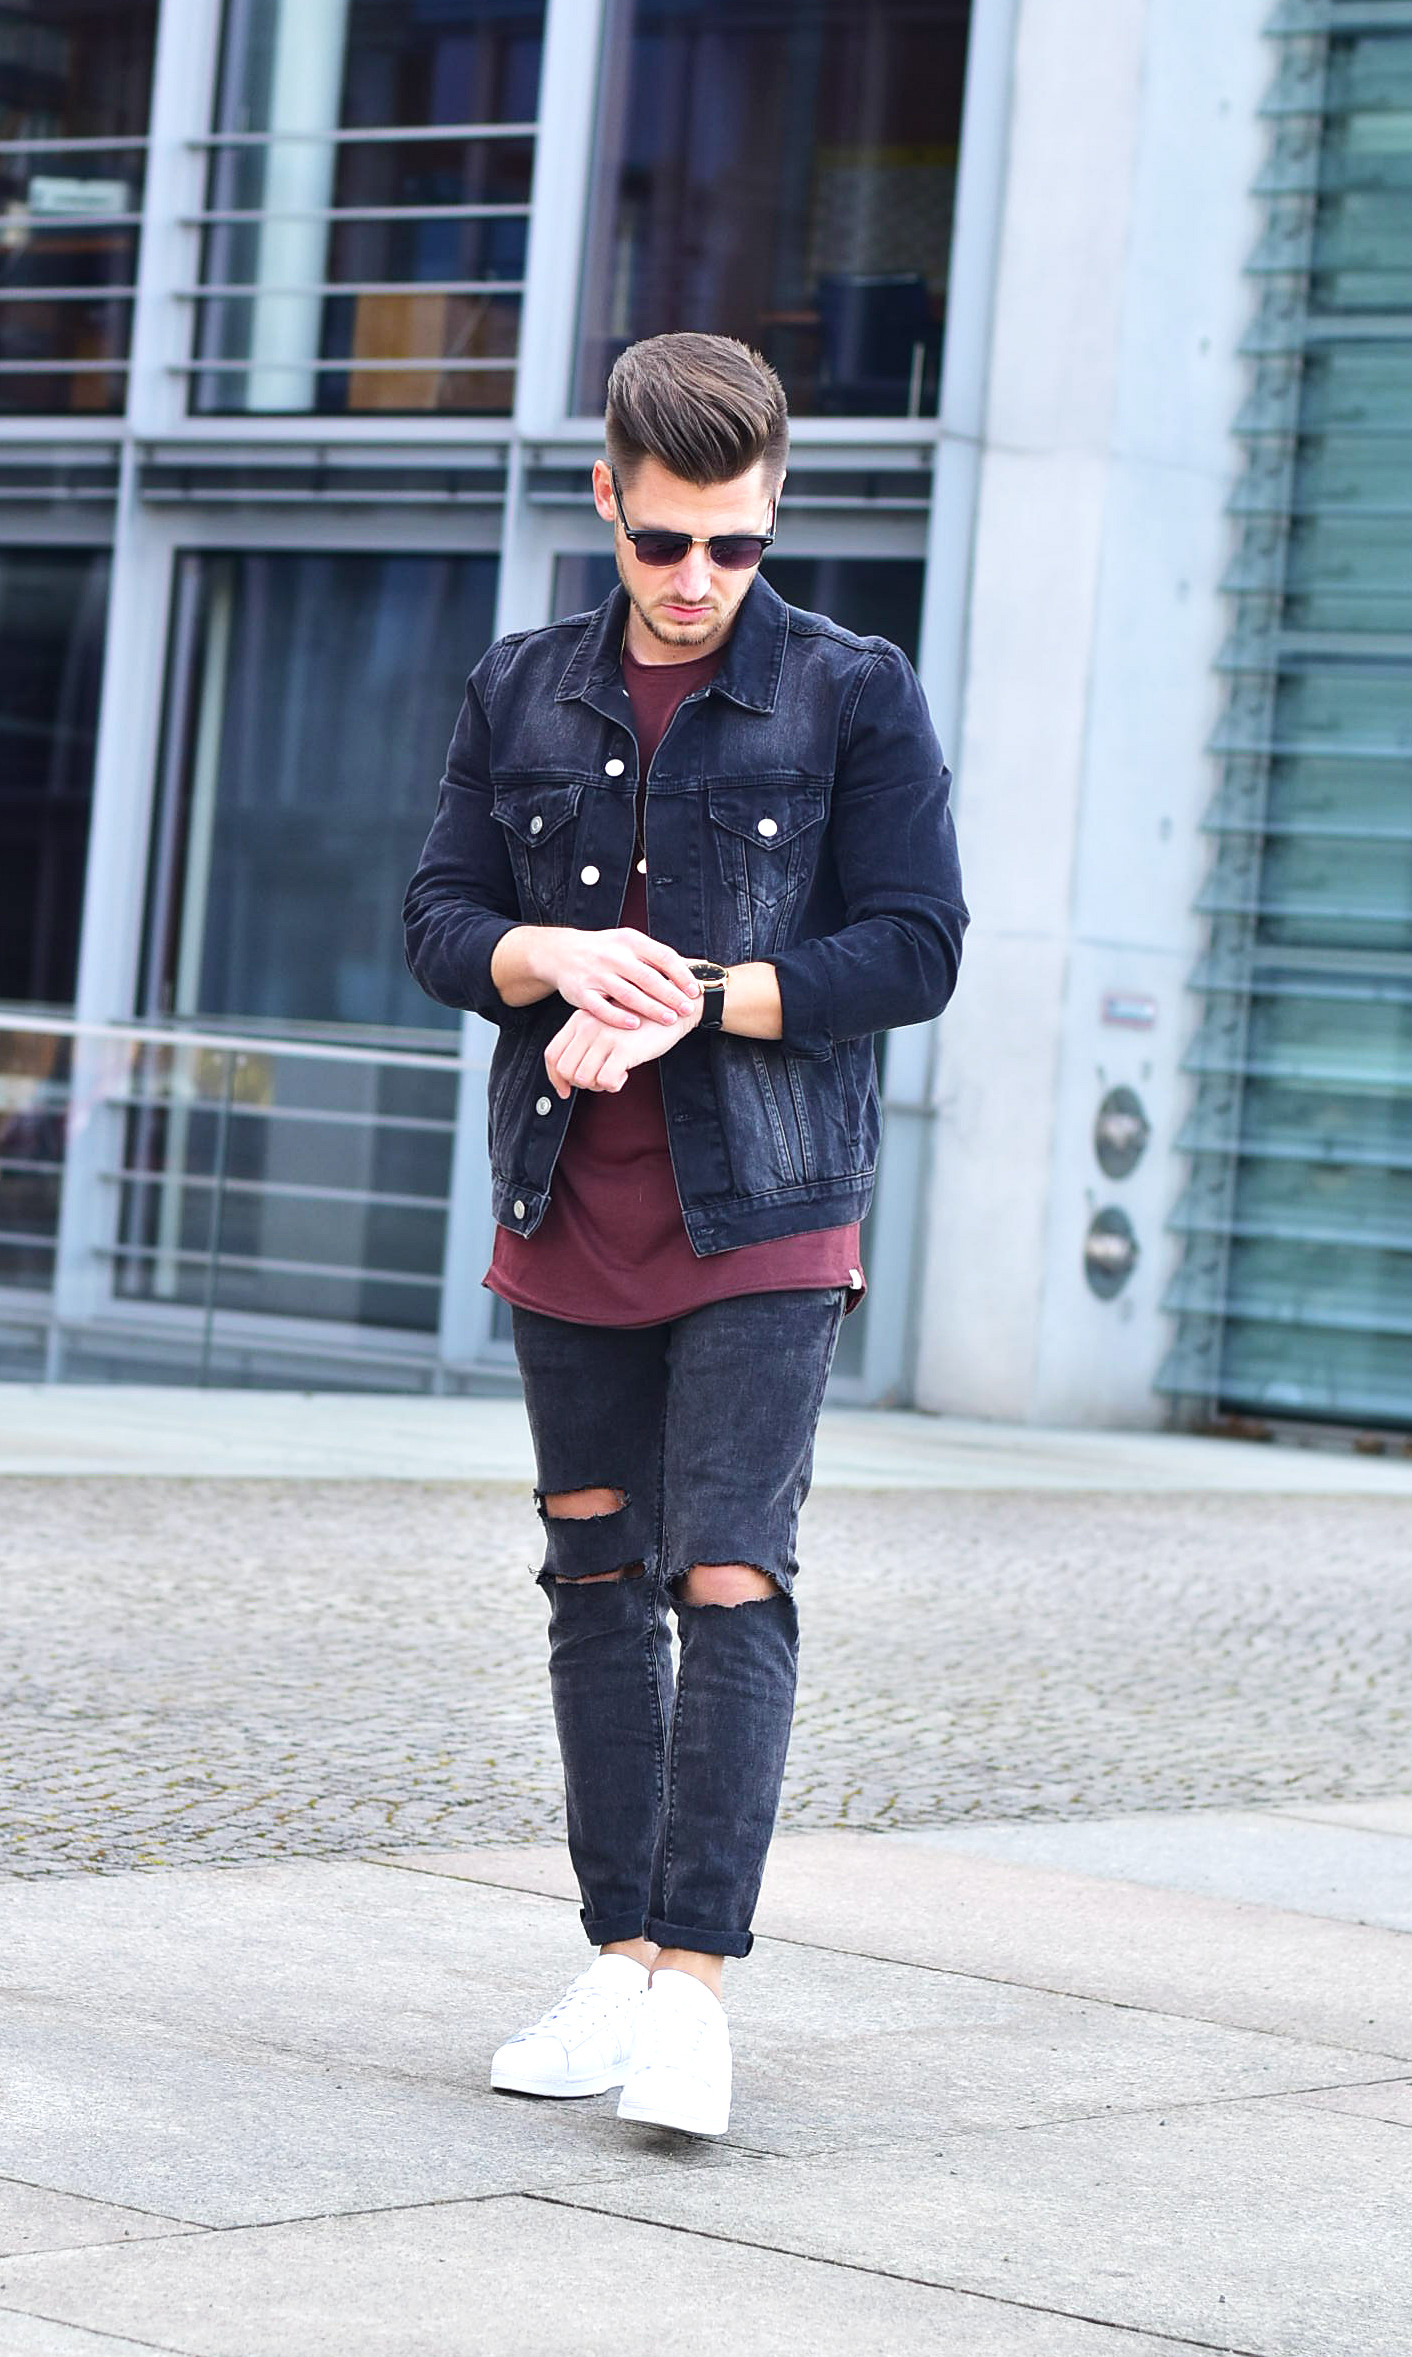 Tommeezjerry-Styleblog-Männerblog-Modeblog-Berlin-Outfit-Jeanslook-Ripped-Jeans-Jeansjacke-Adidas-Superstar-Adidas-Longshirt-Goldschmukc